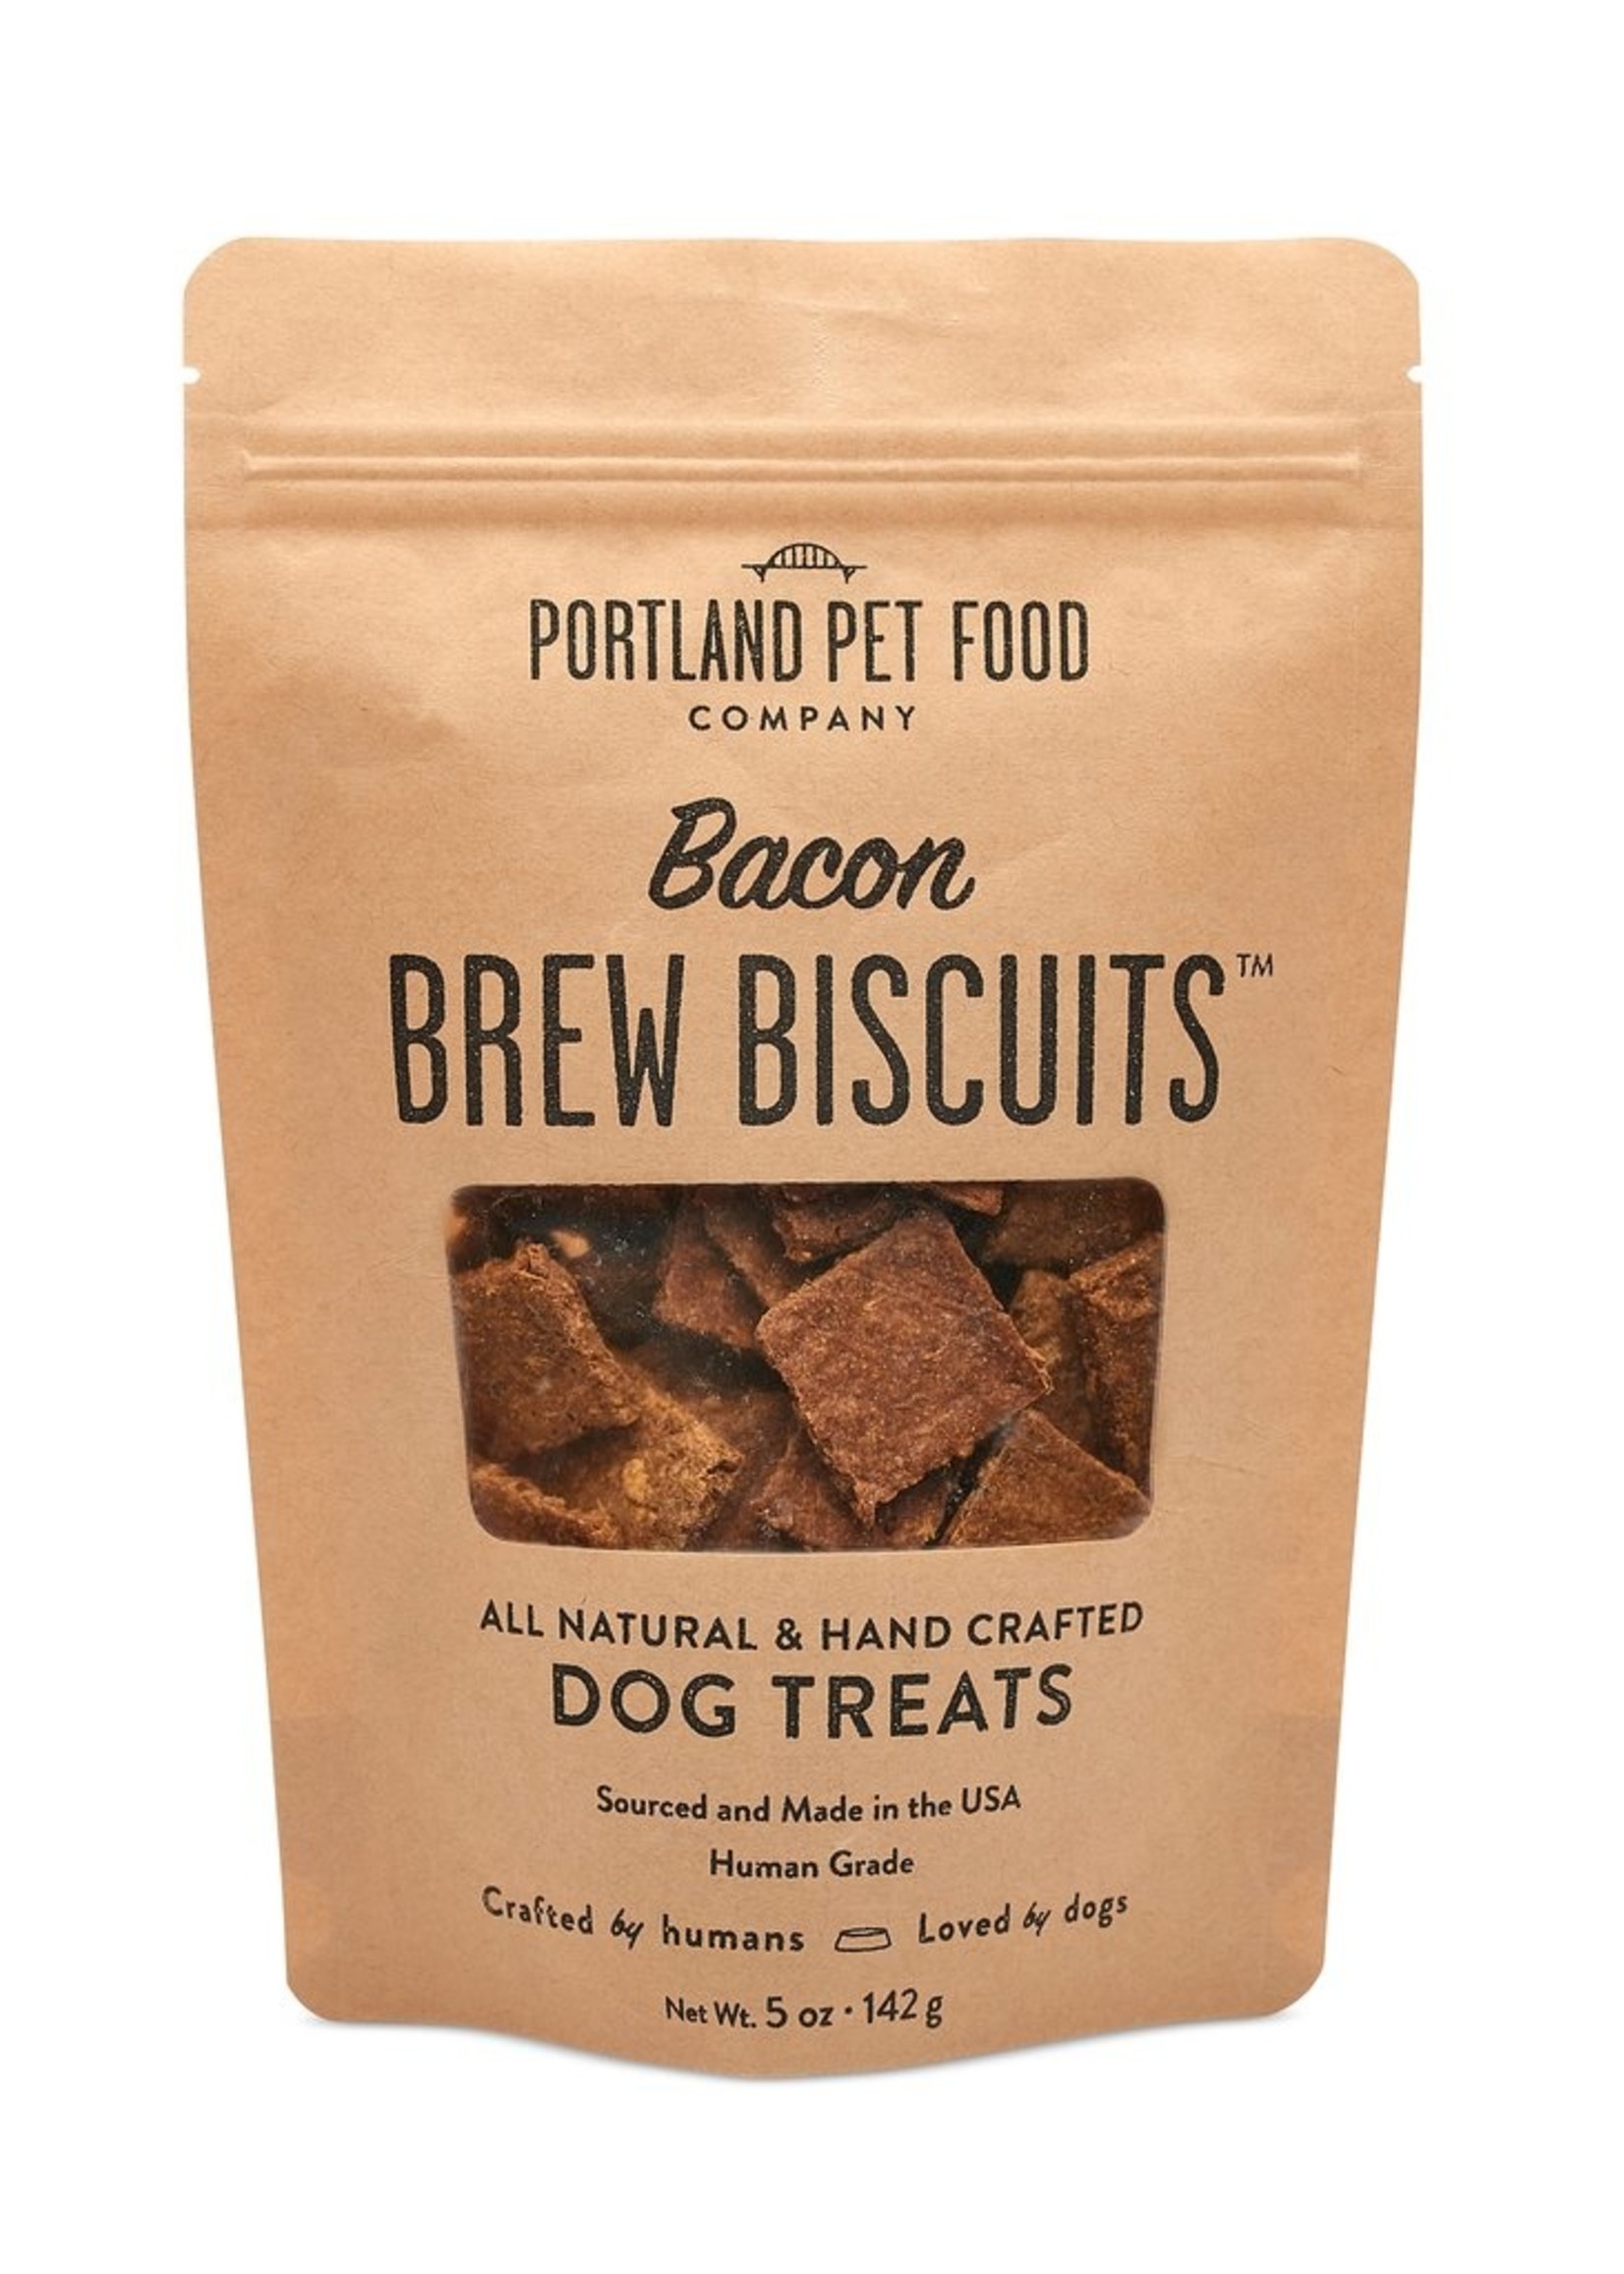 Portland Pet Food Company Portland Pet Bacon Brew Biscuits 5 oz